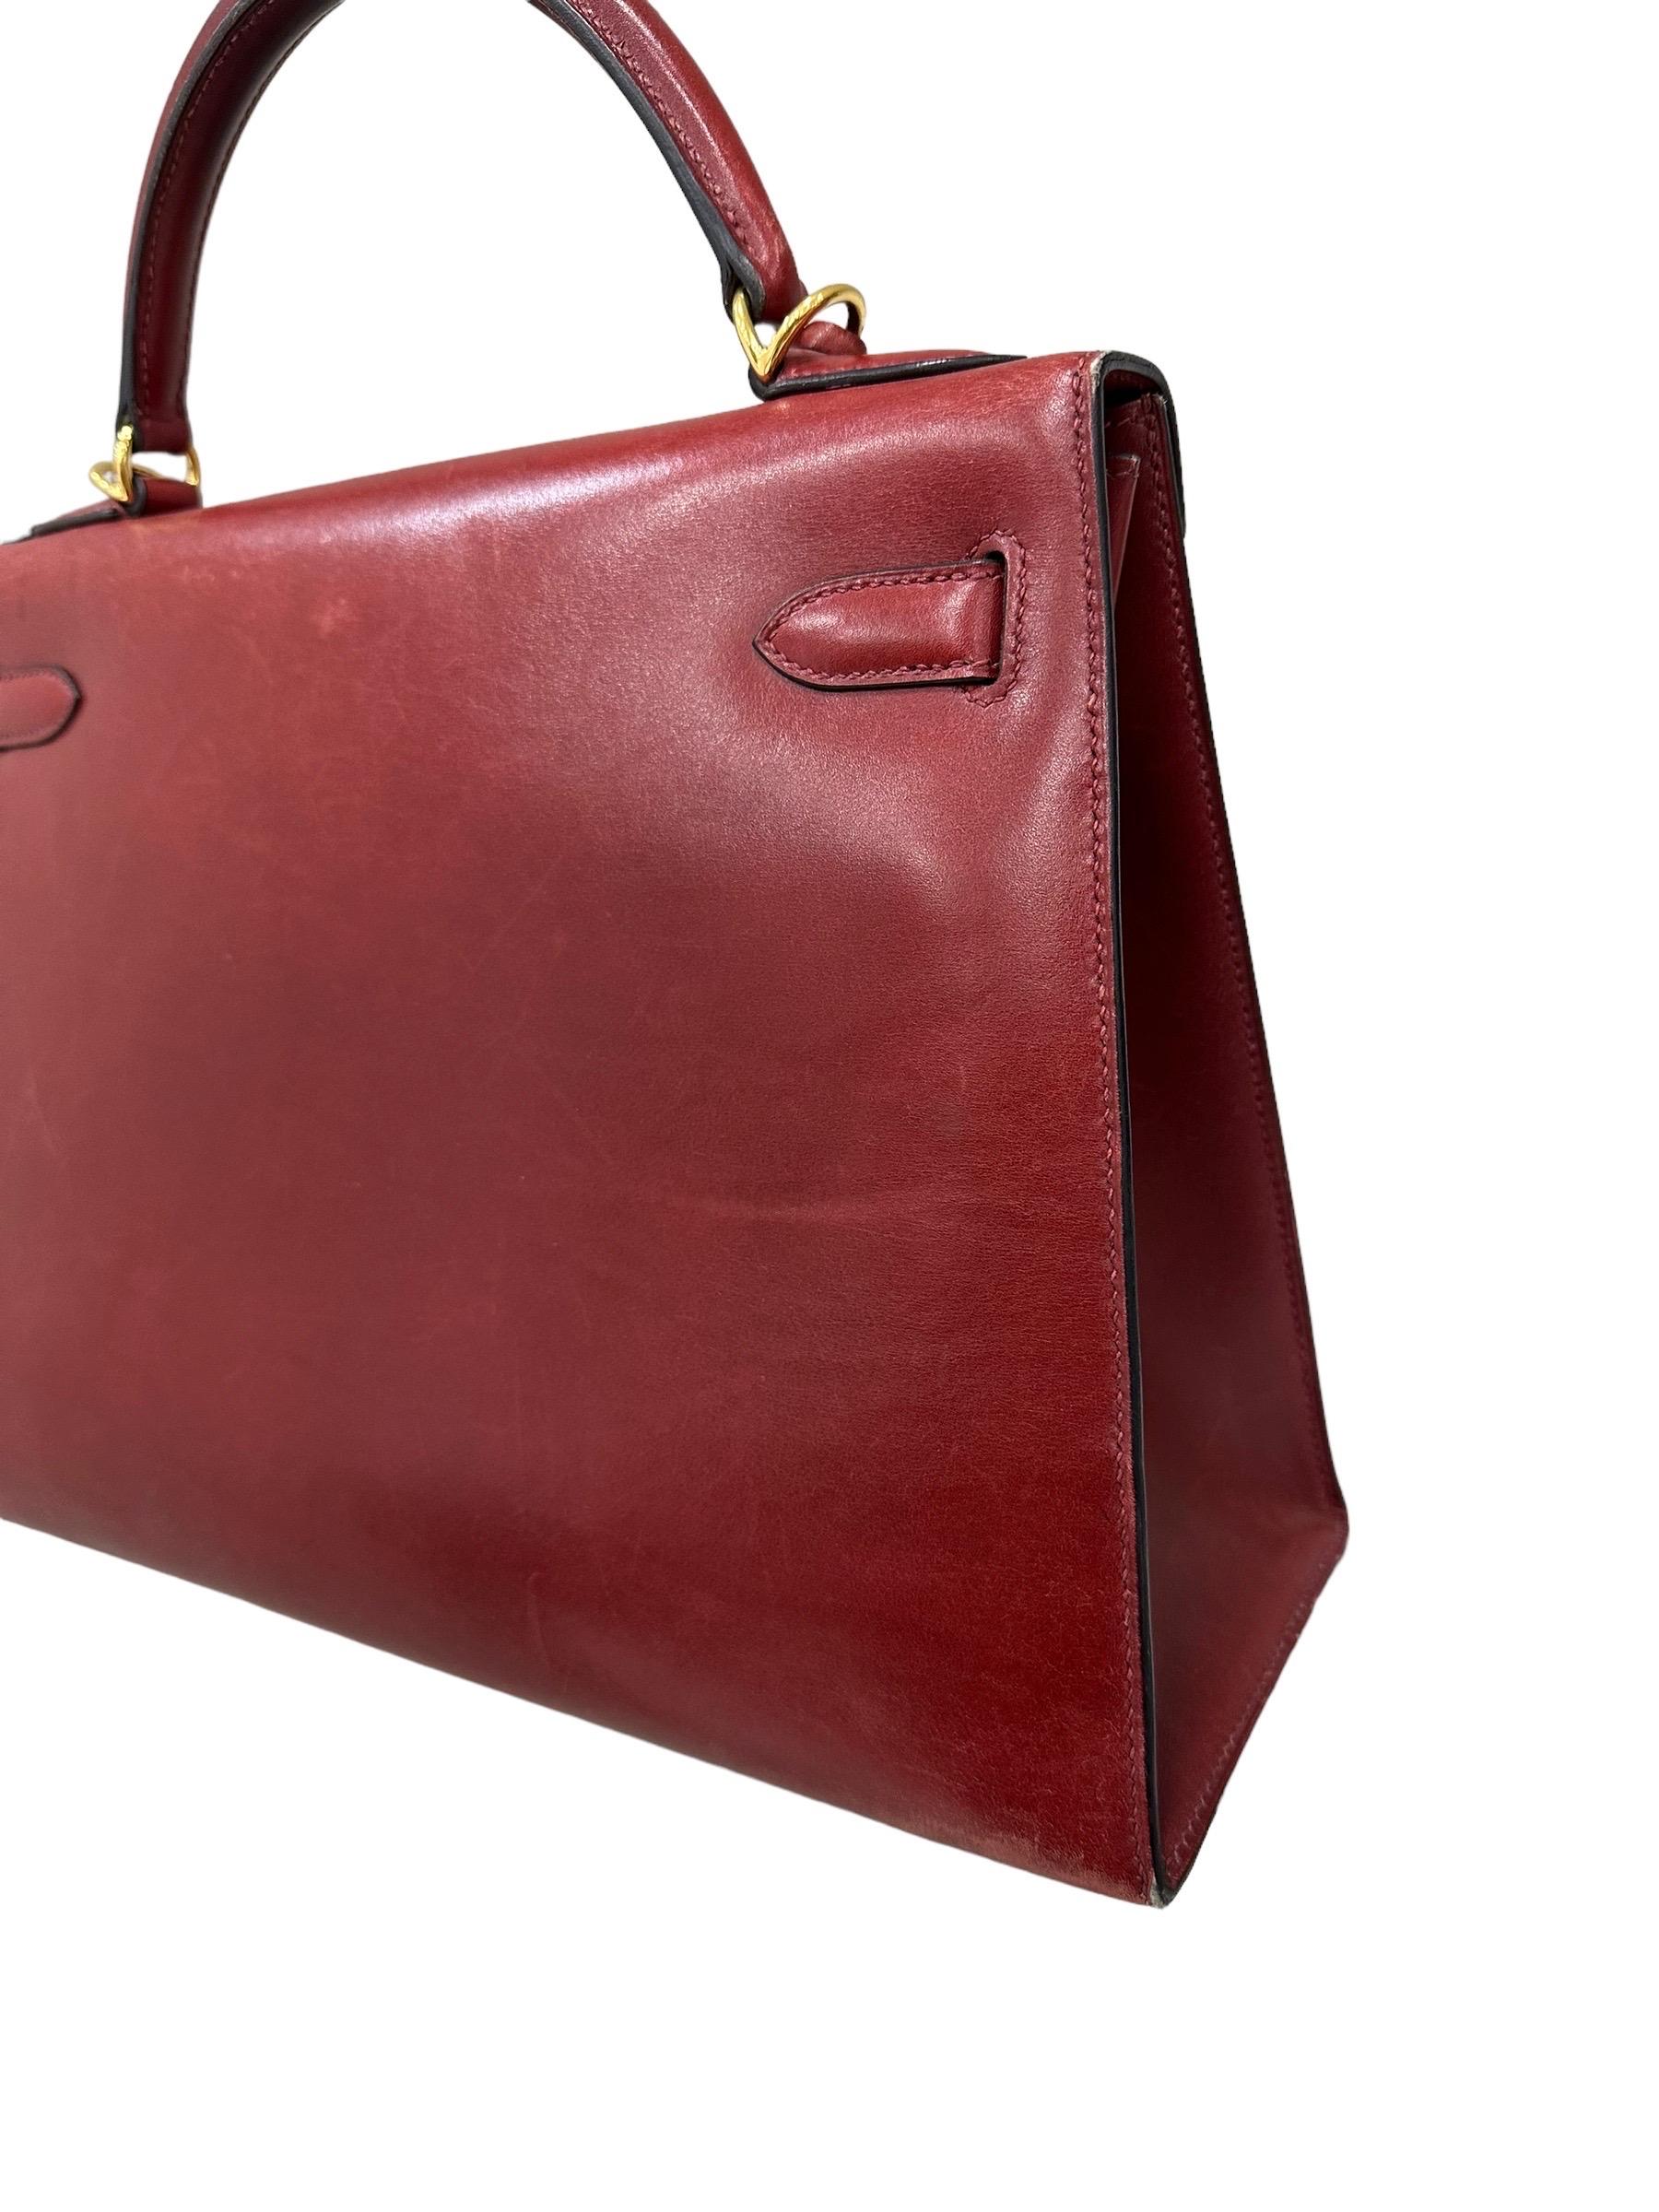 2008 Hermès Kelly 32 Box Calf Leather Rouge H Top Handle Bag 2